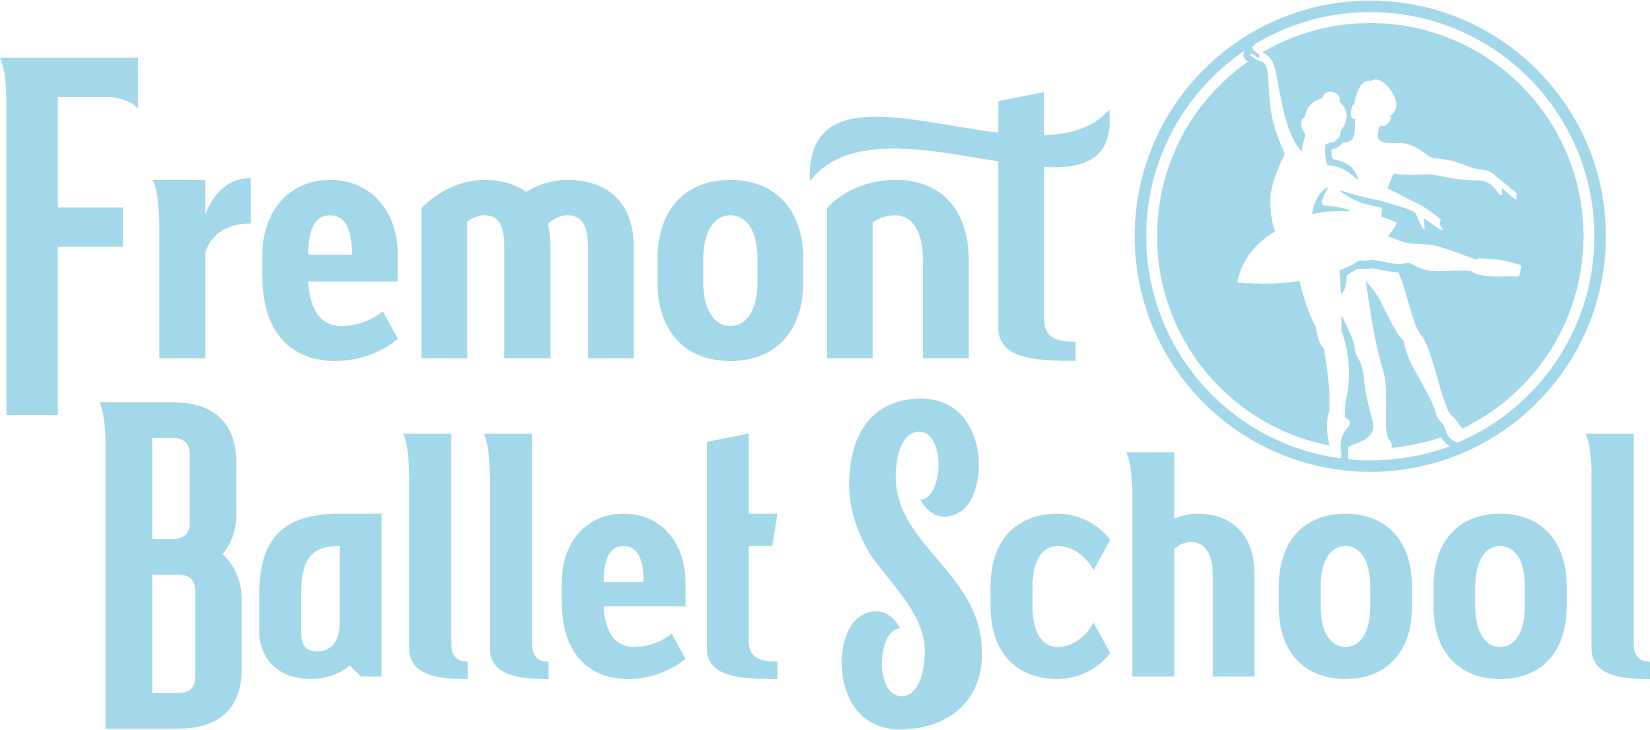 The Fremont Ballet School